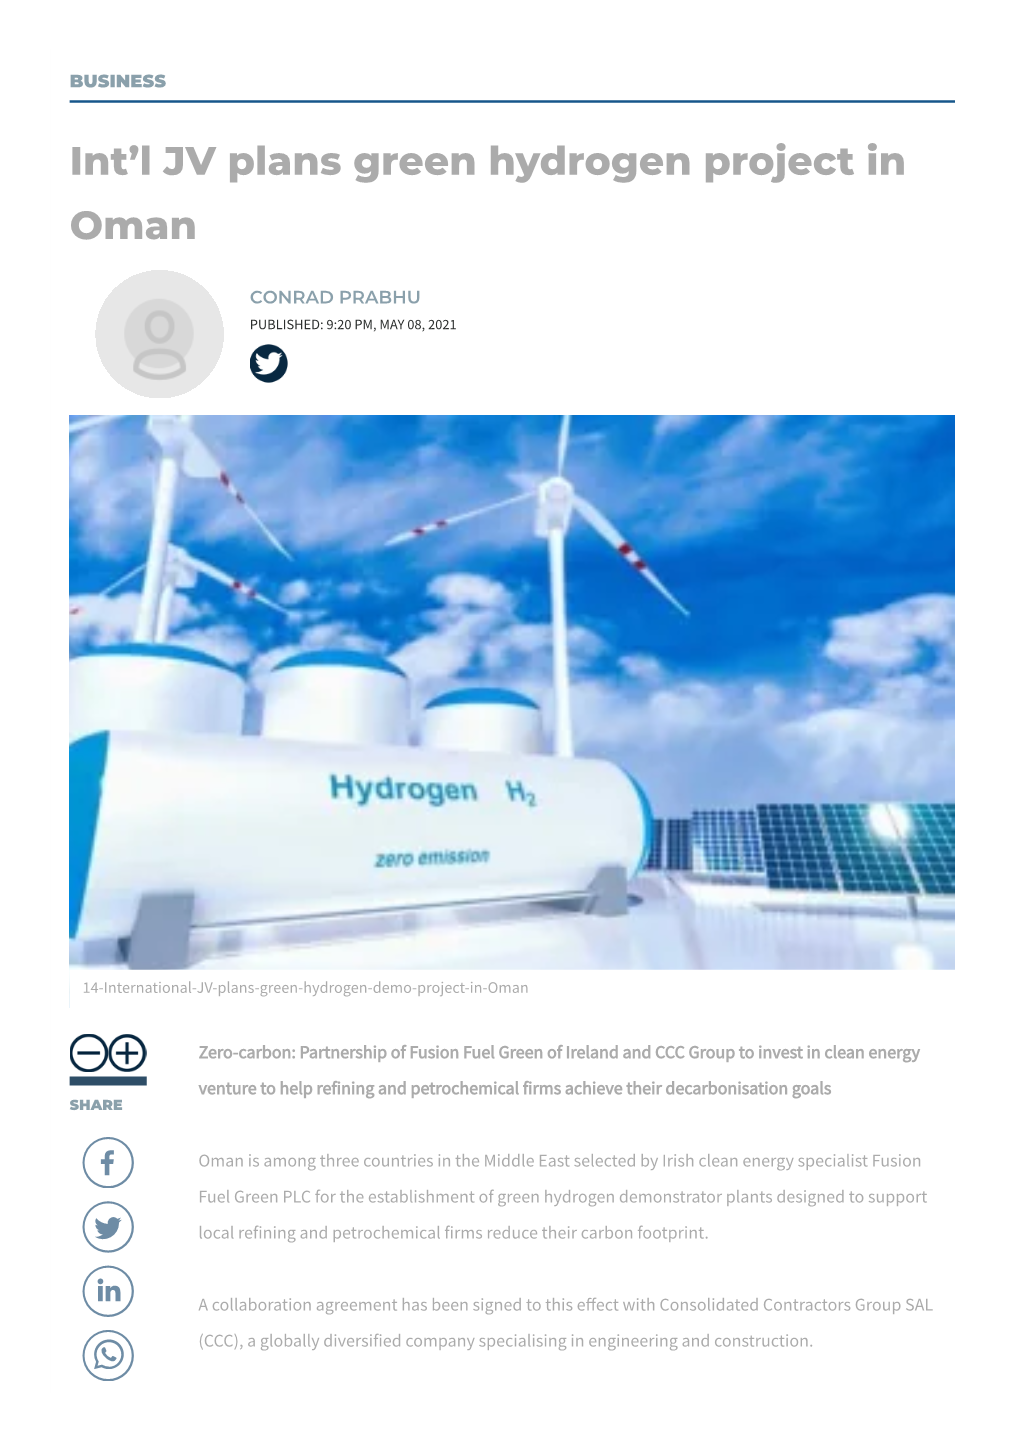 Int'l JV Plans Green Hydrogen Project in Oman